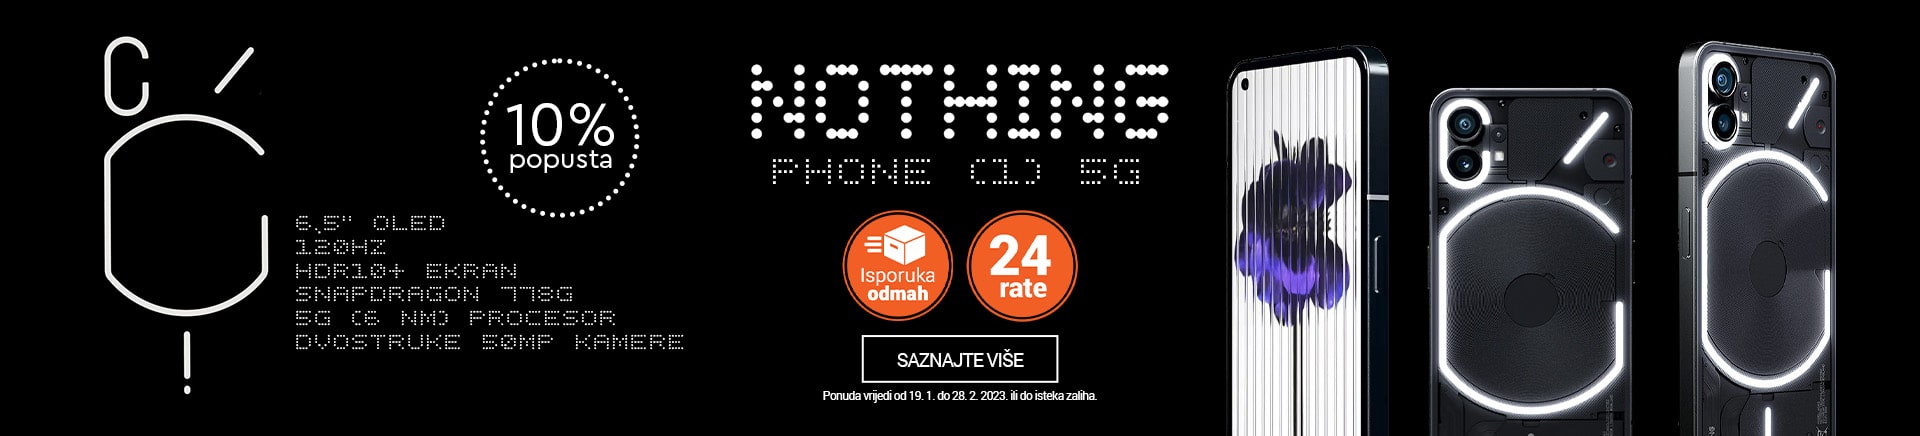 HR~Nothing Phone 5G 10 posto popusta MOBILE 380 X 436-min.jpg